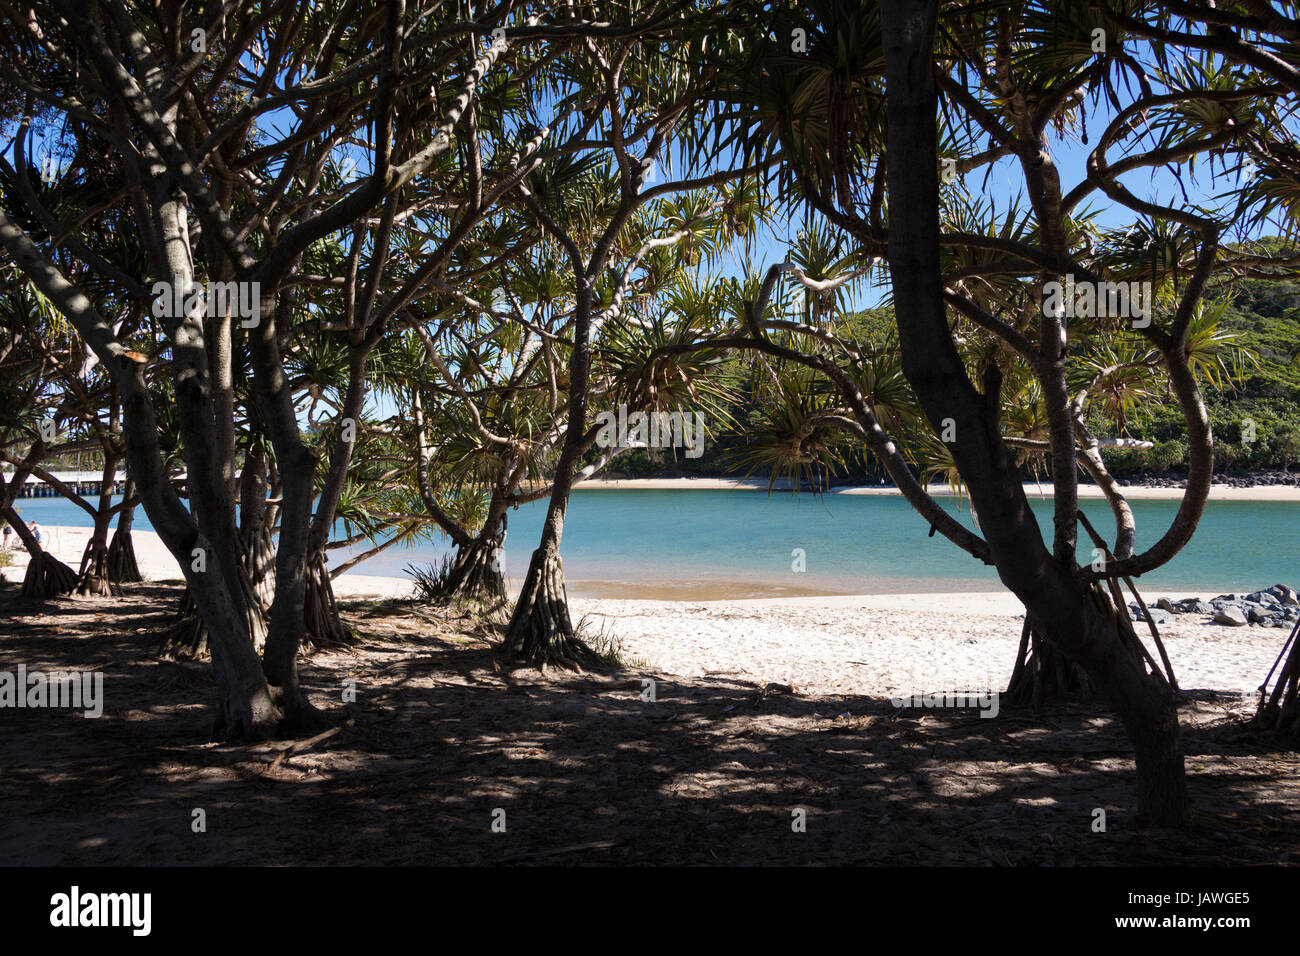 Un acceso a la playa de Burleigh Heads a través de los árboles. Burleigh Heads, Gold Coast, Australia Foto de stock